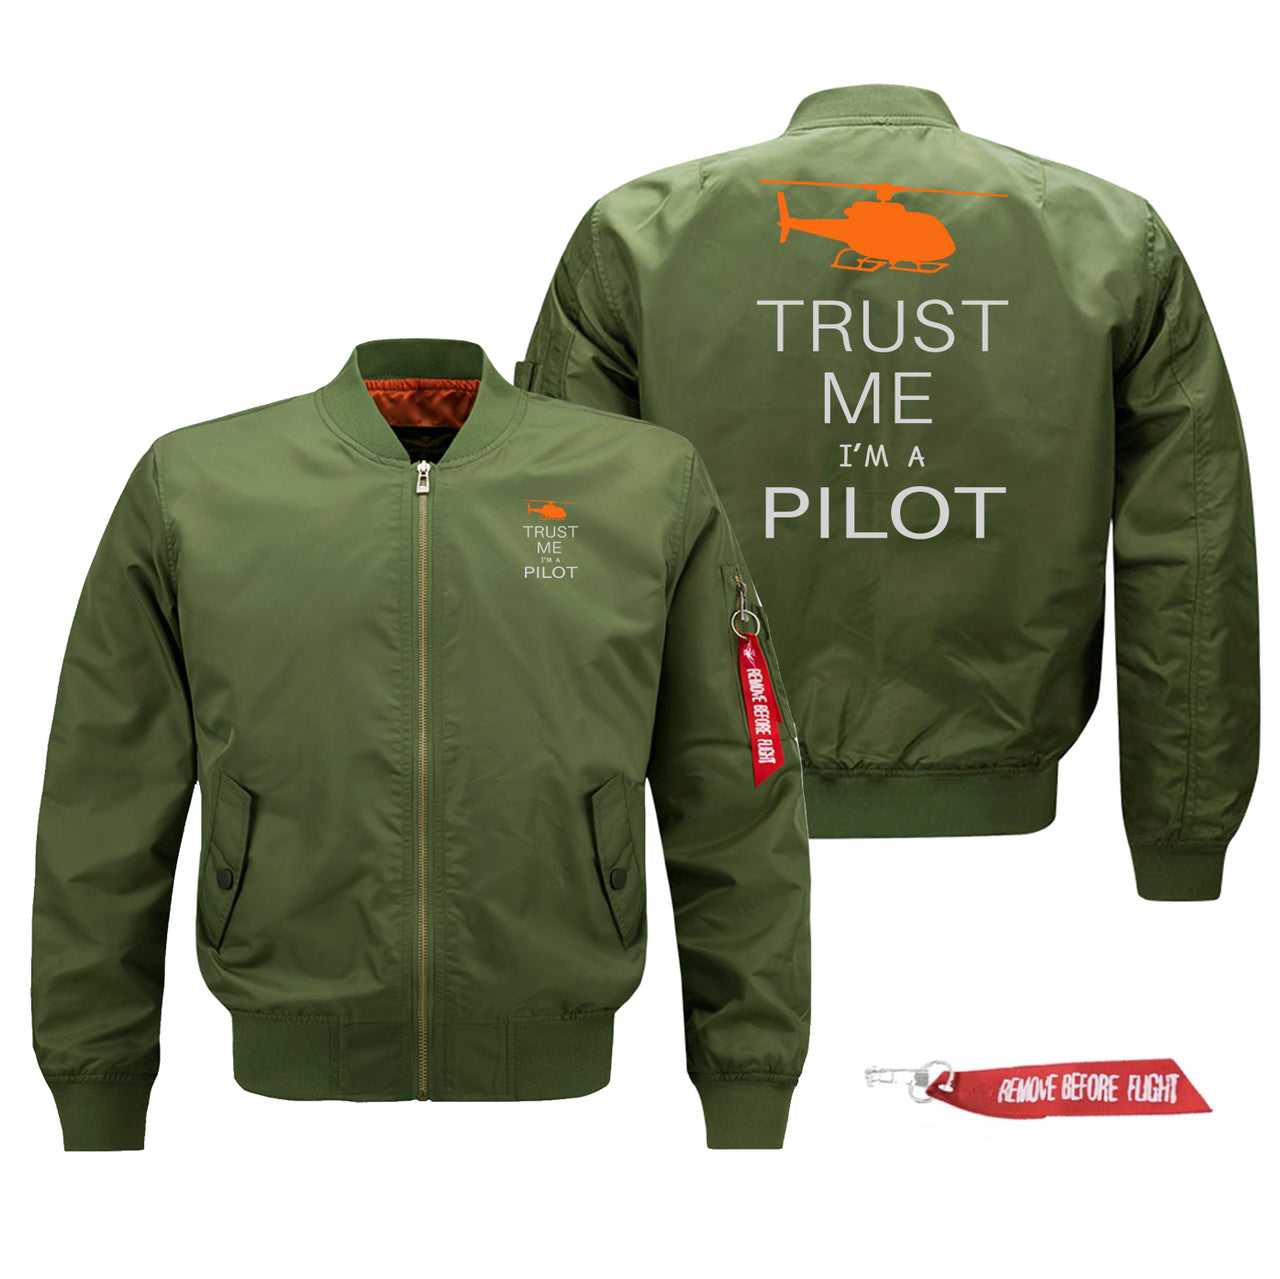 Trust Me I'm a Pilot (Helicopter) Designed Pilot Jackets (Customizable)